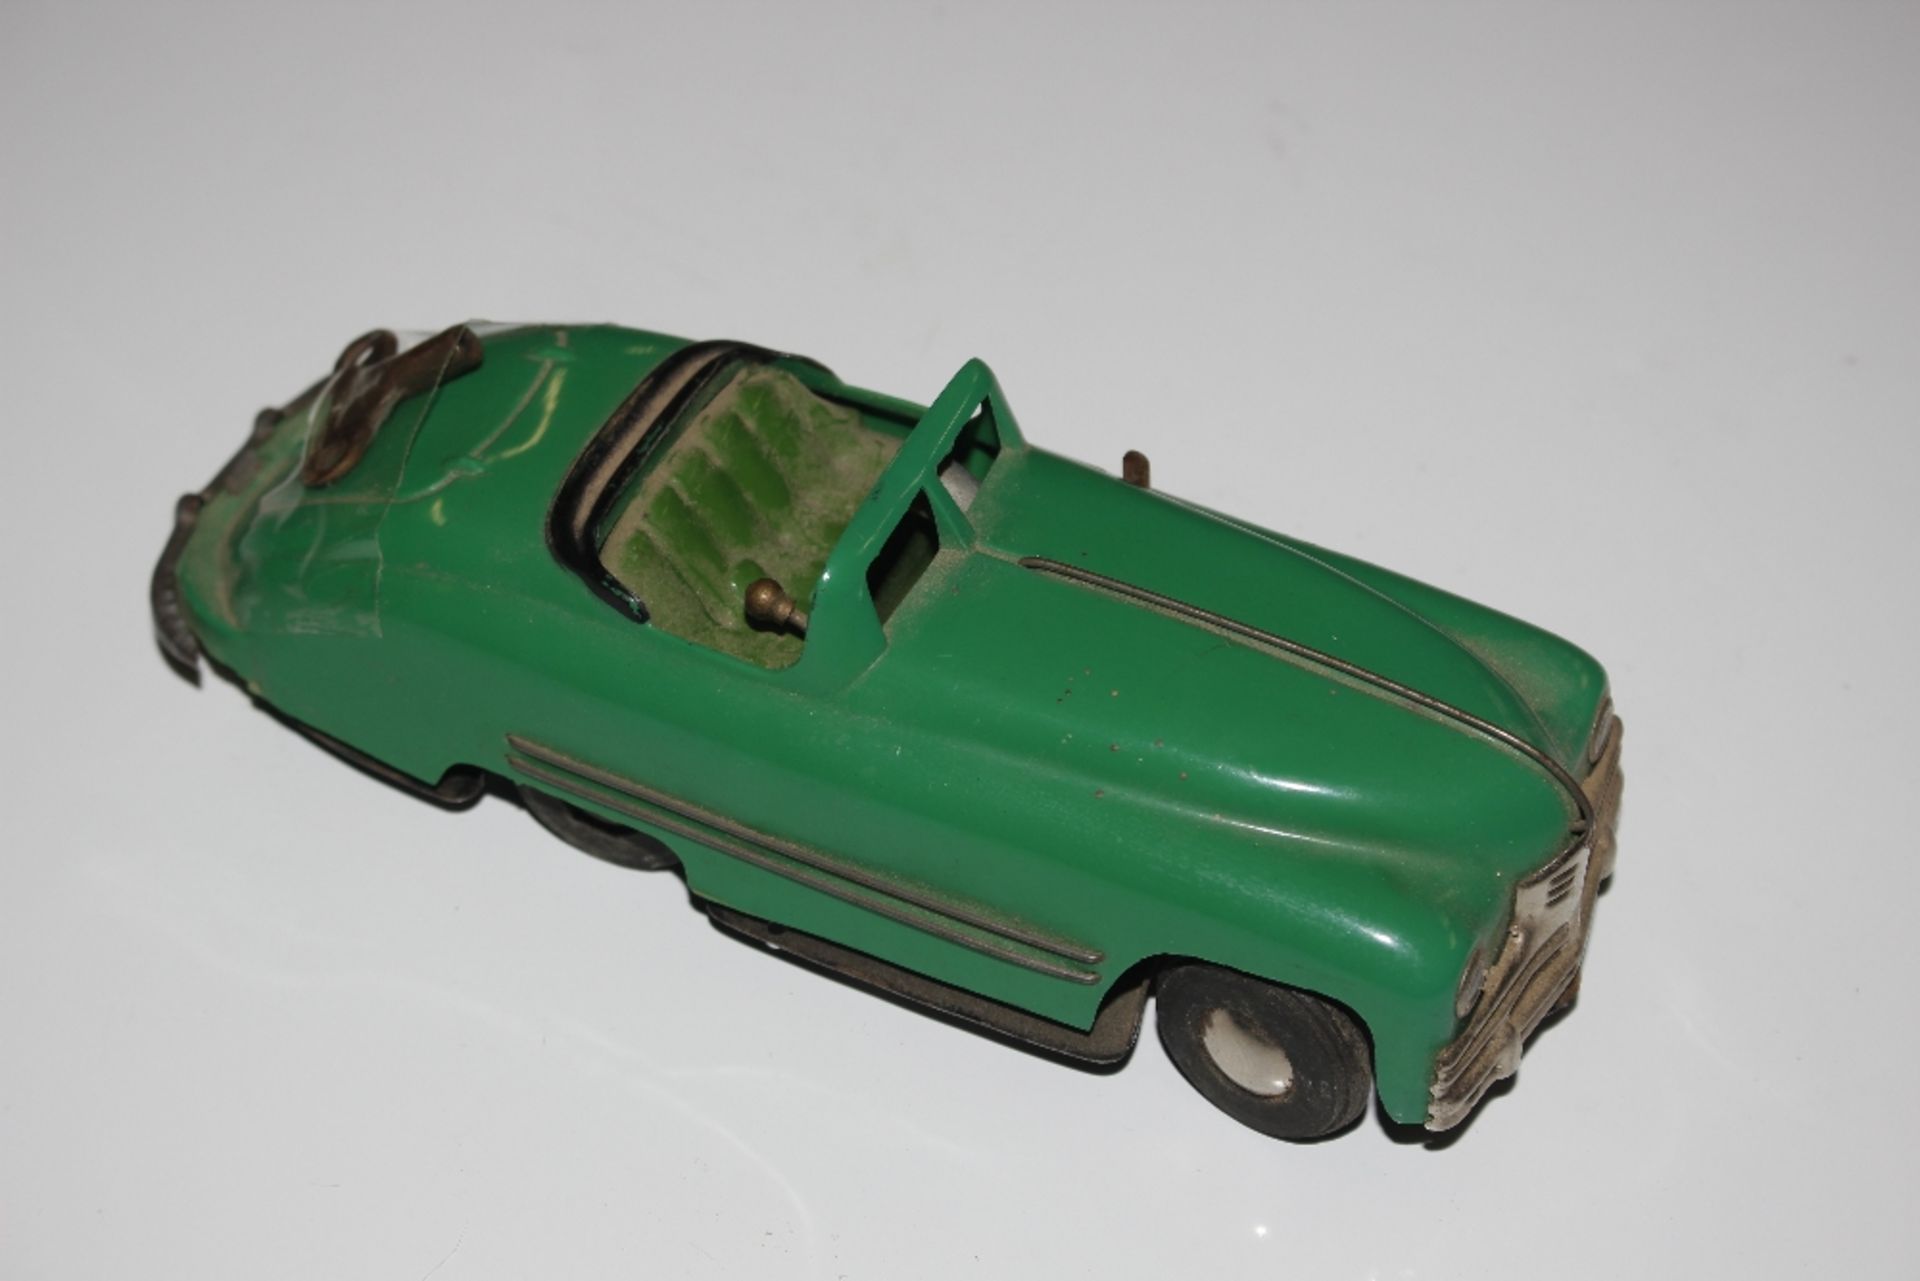 A vintage clockwork toy car